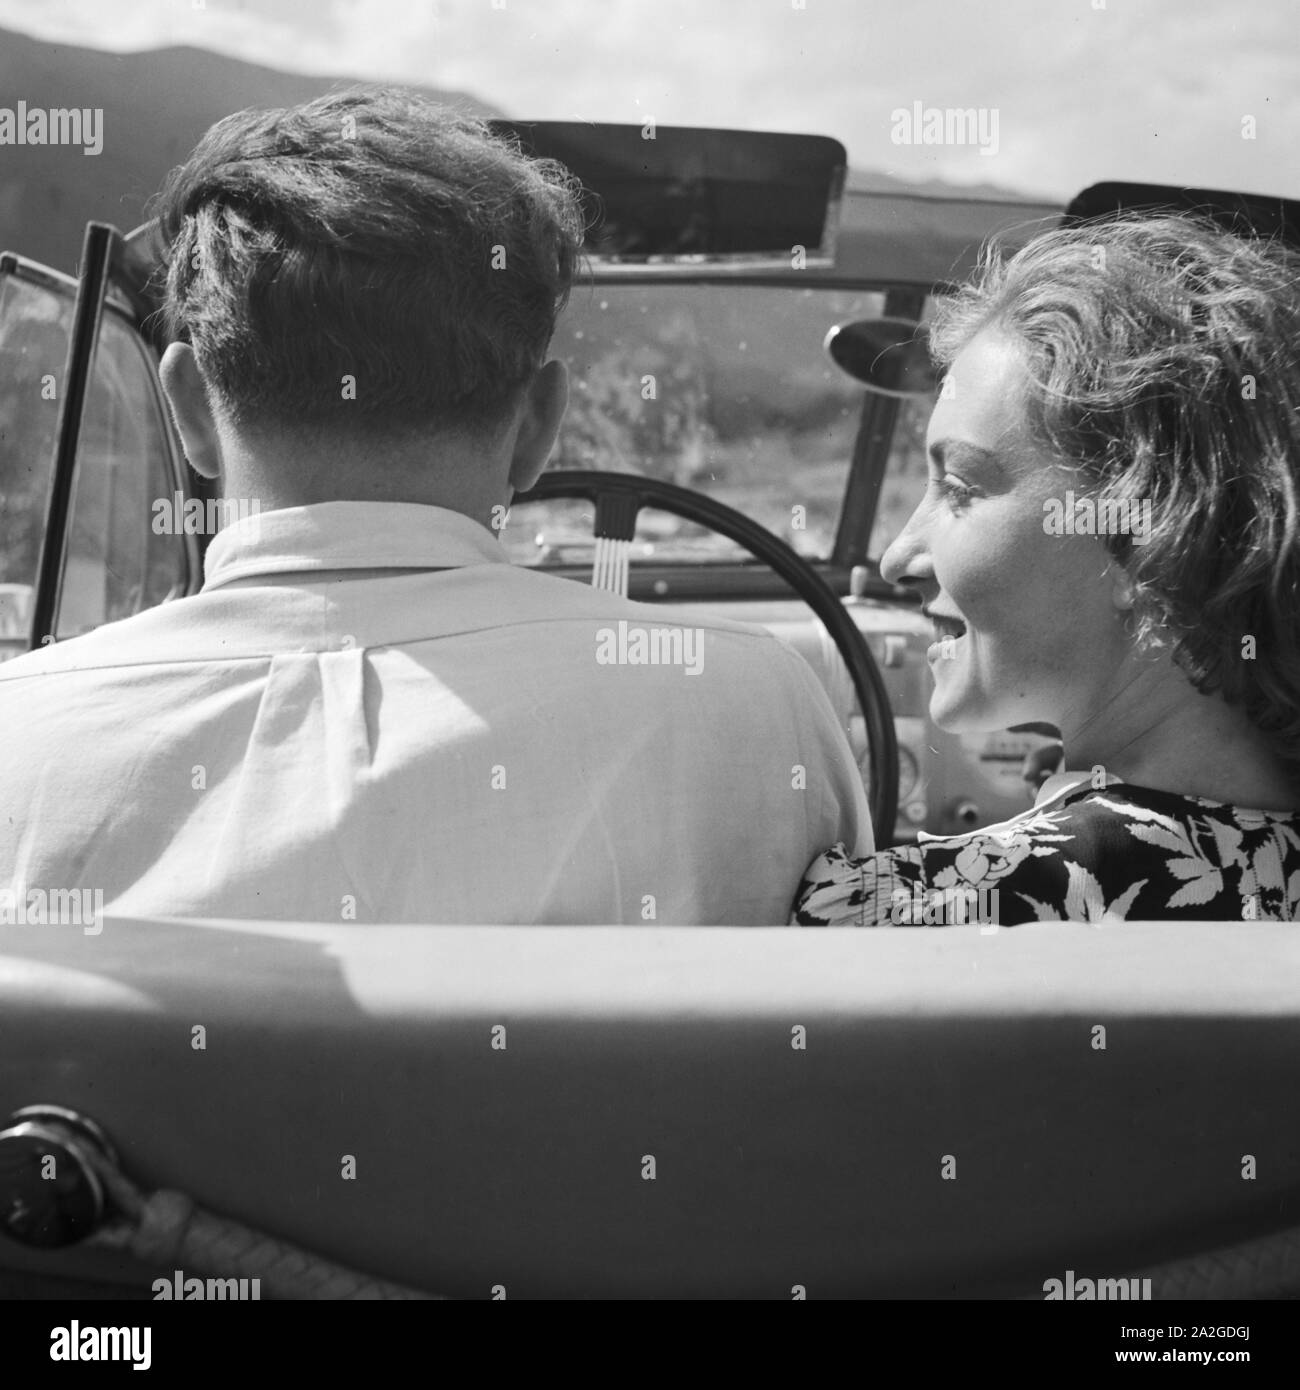 Eine Frau und ein Mann fahren in einem Opel Olympia, Deutschland 1930er Jahre. A woman and a man driving in s Opel model Olympia, Germany 1930s. Stock Photo